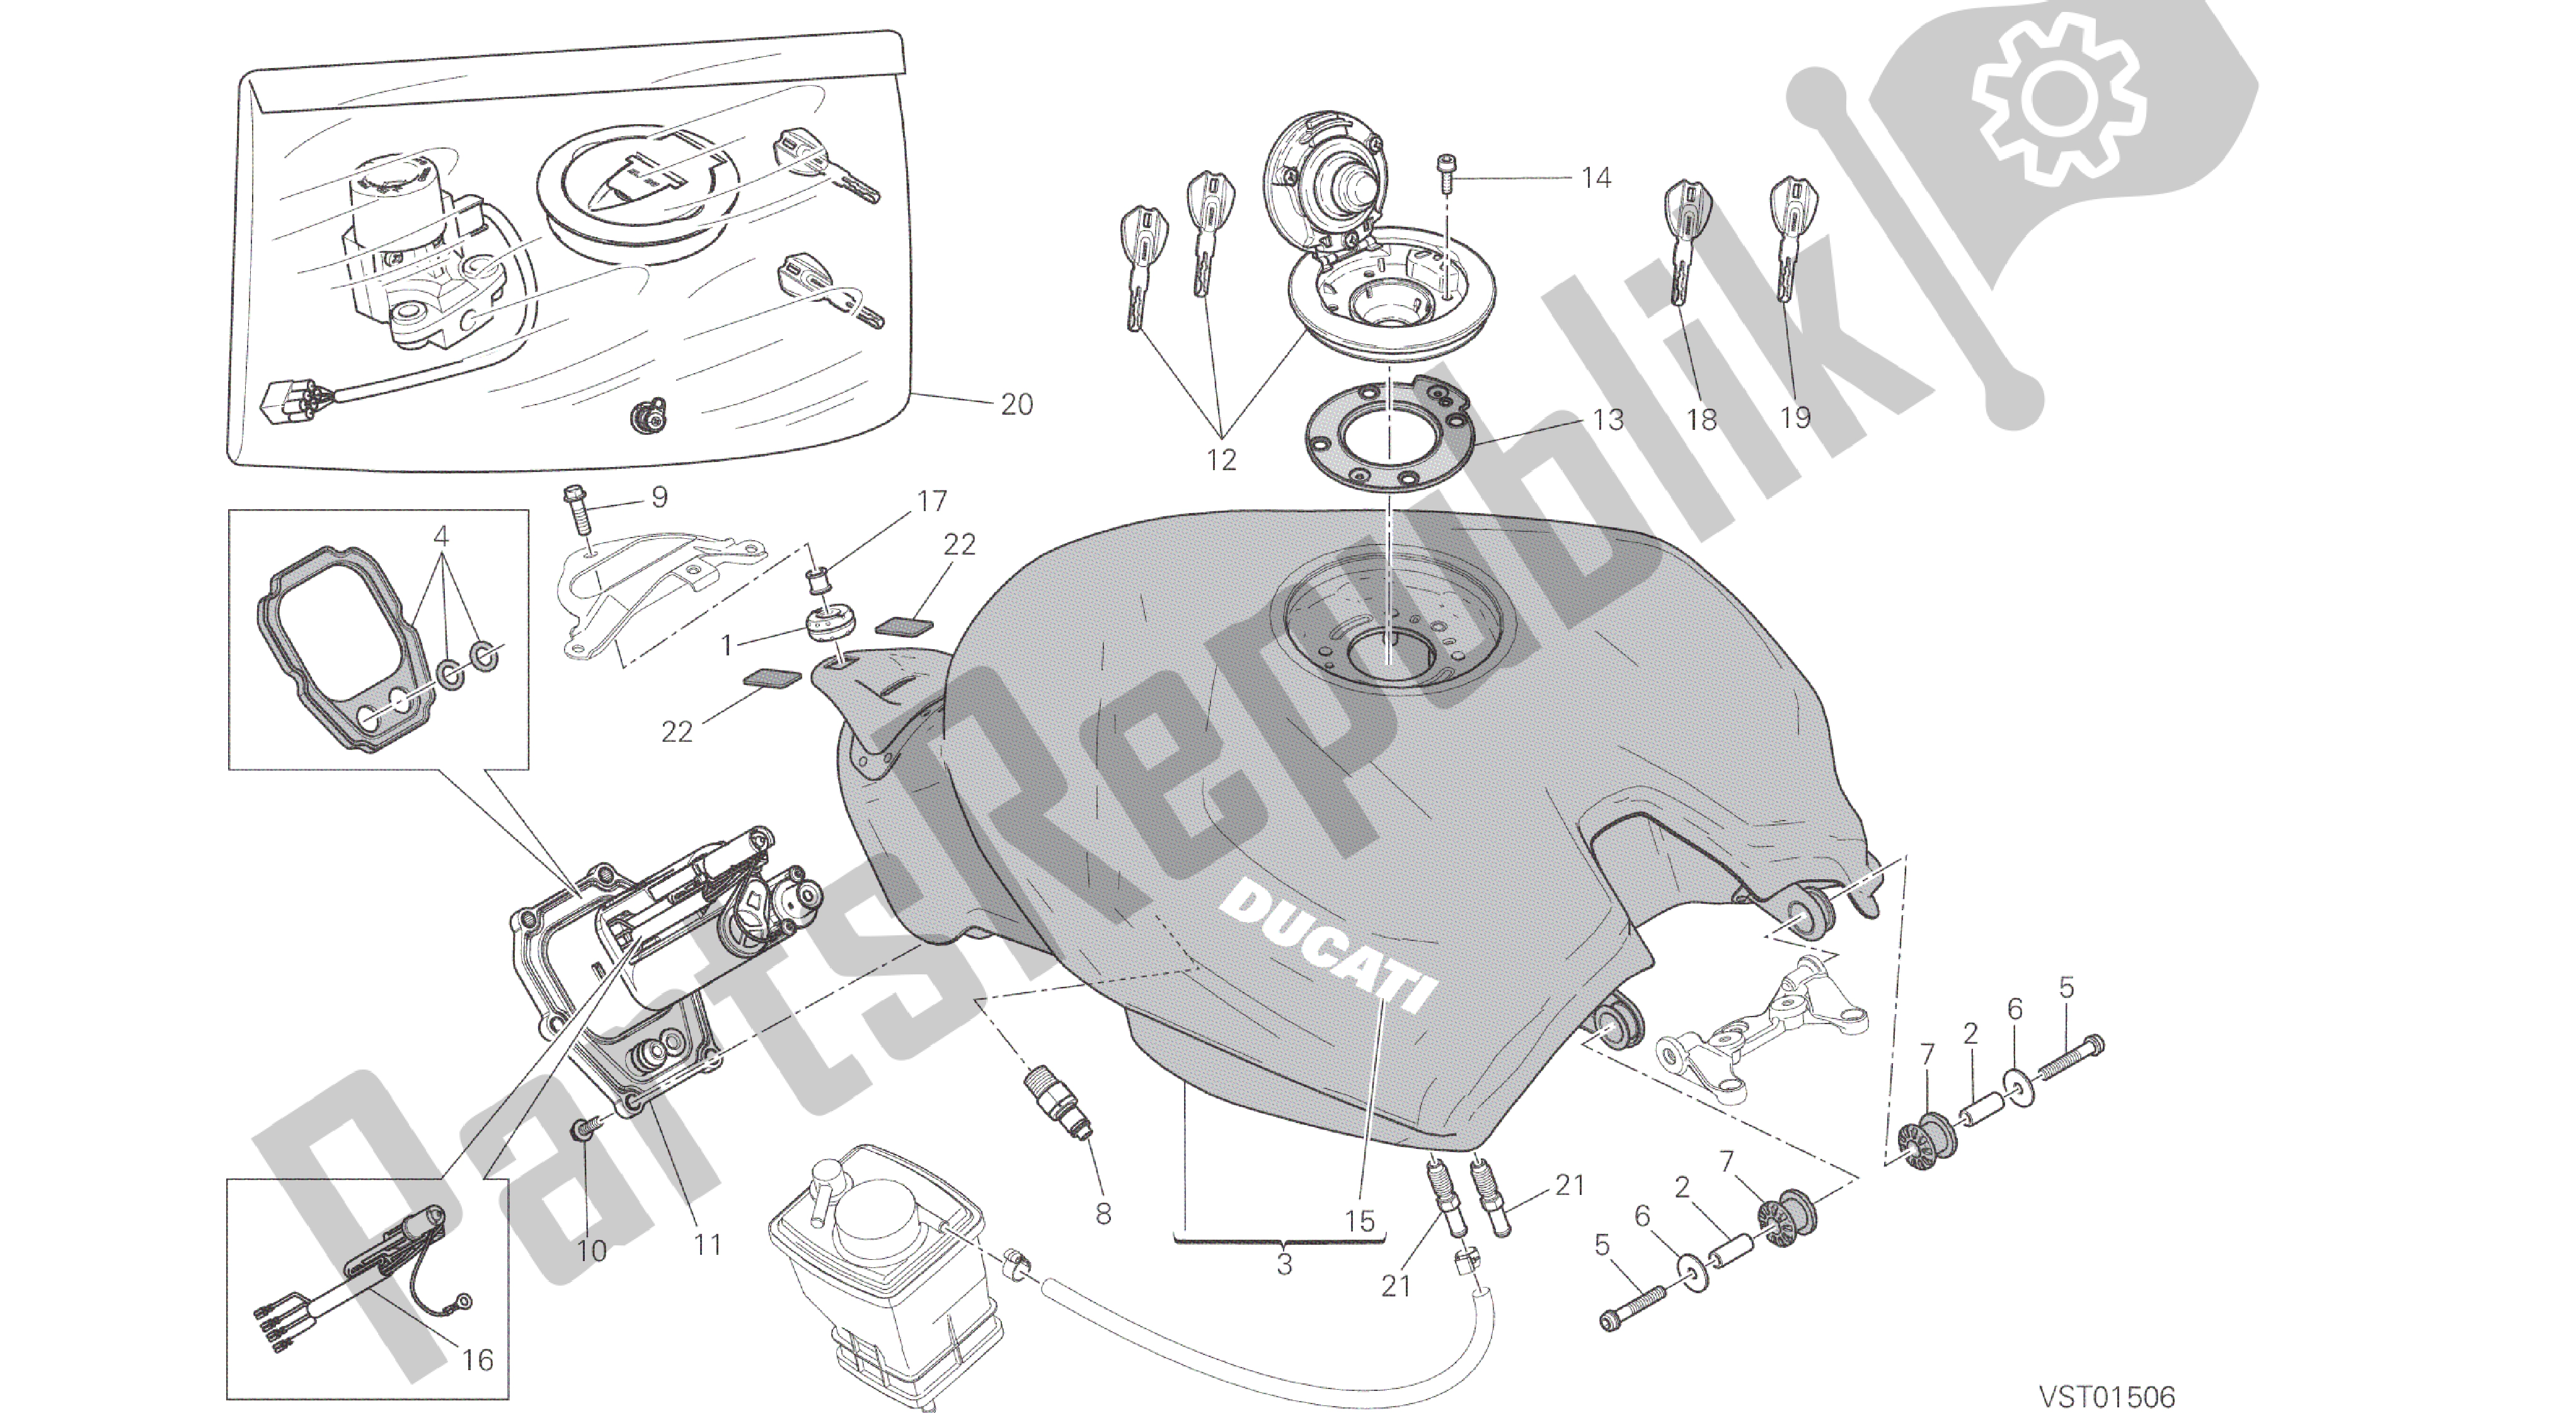 Todas las partes para Dibujo 032 - Marco De Grupo Tanque [mod: 959,959 Aws] de Ducati Panigale 959 2016